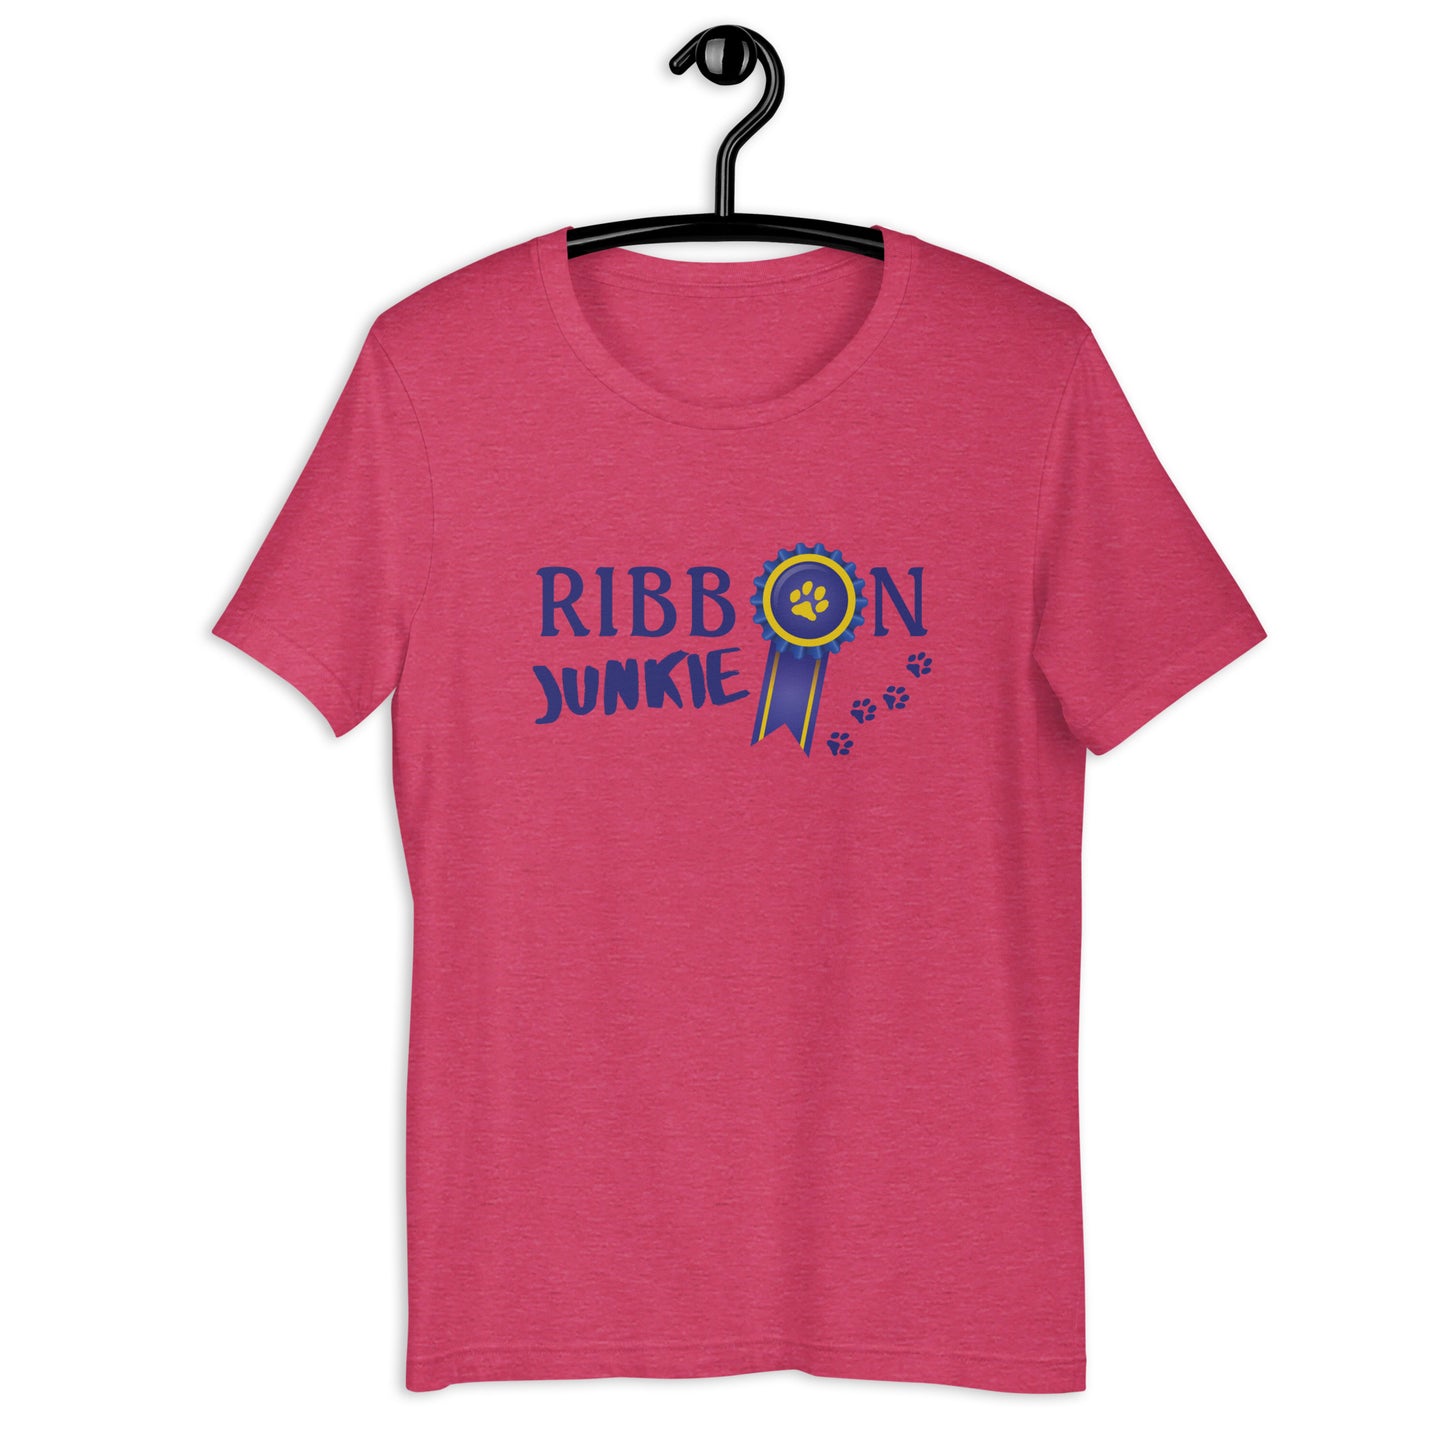 RIBBON JUNKIE - Unisex t-shirt